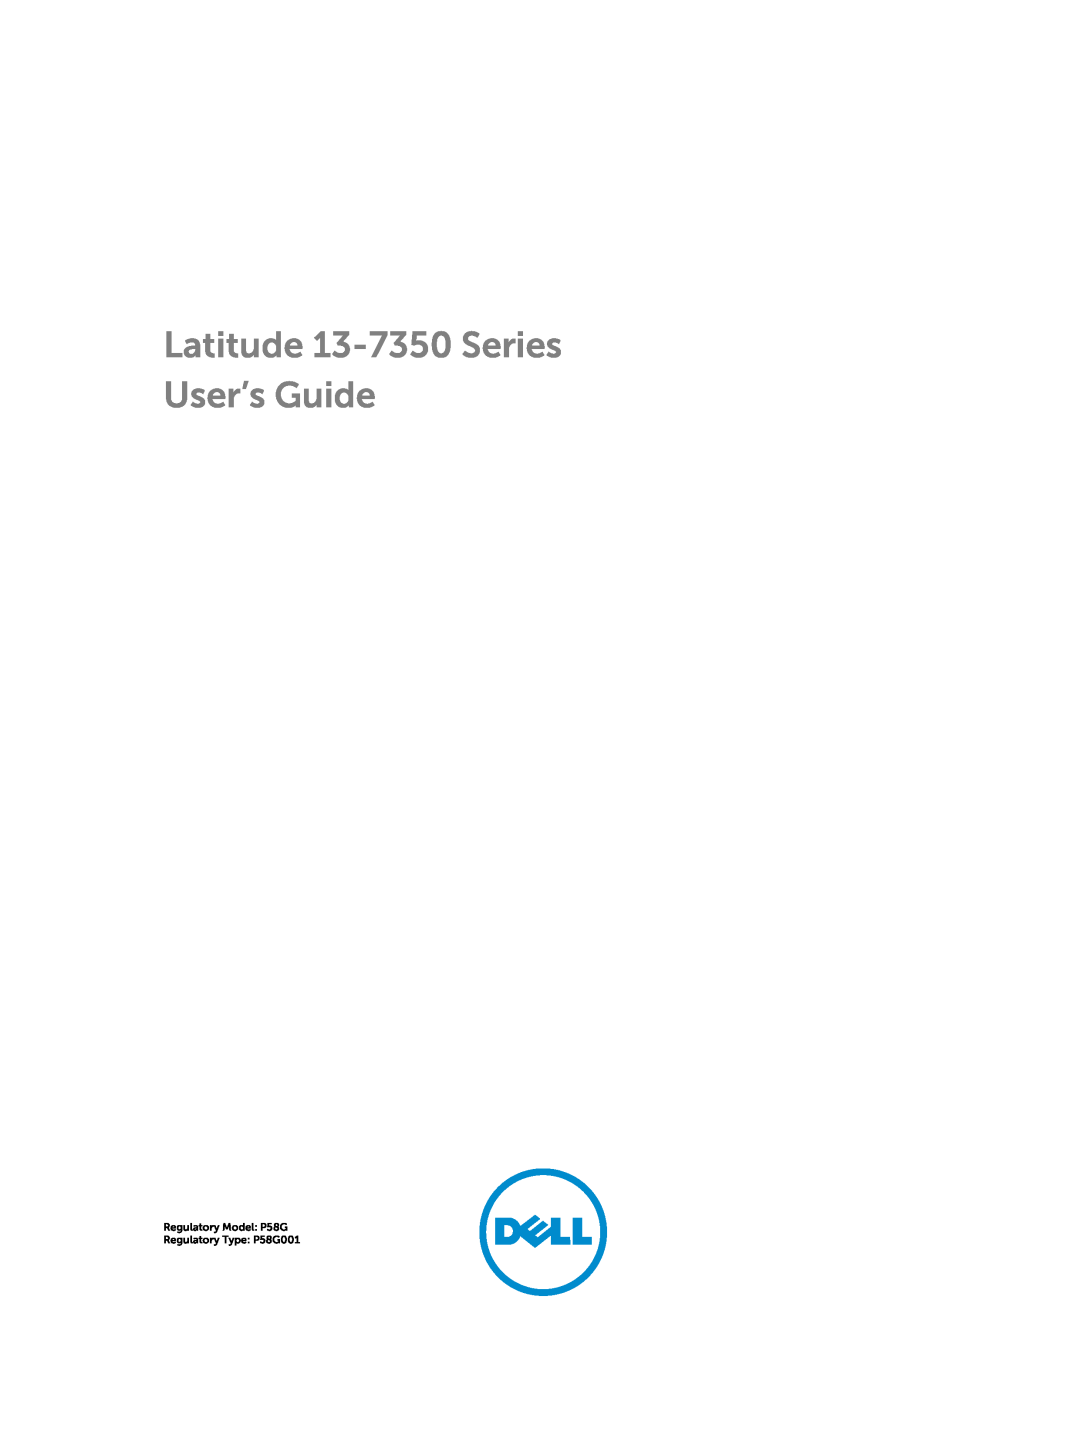 Dell manual Latitude 13-7350 Series User’s Guide, Regulatory Model P58G Regulatory Type P58G001 